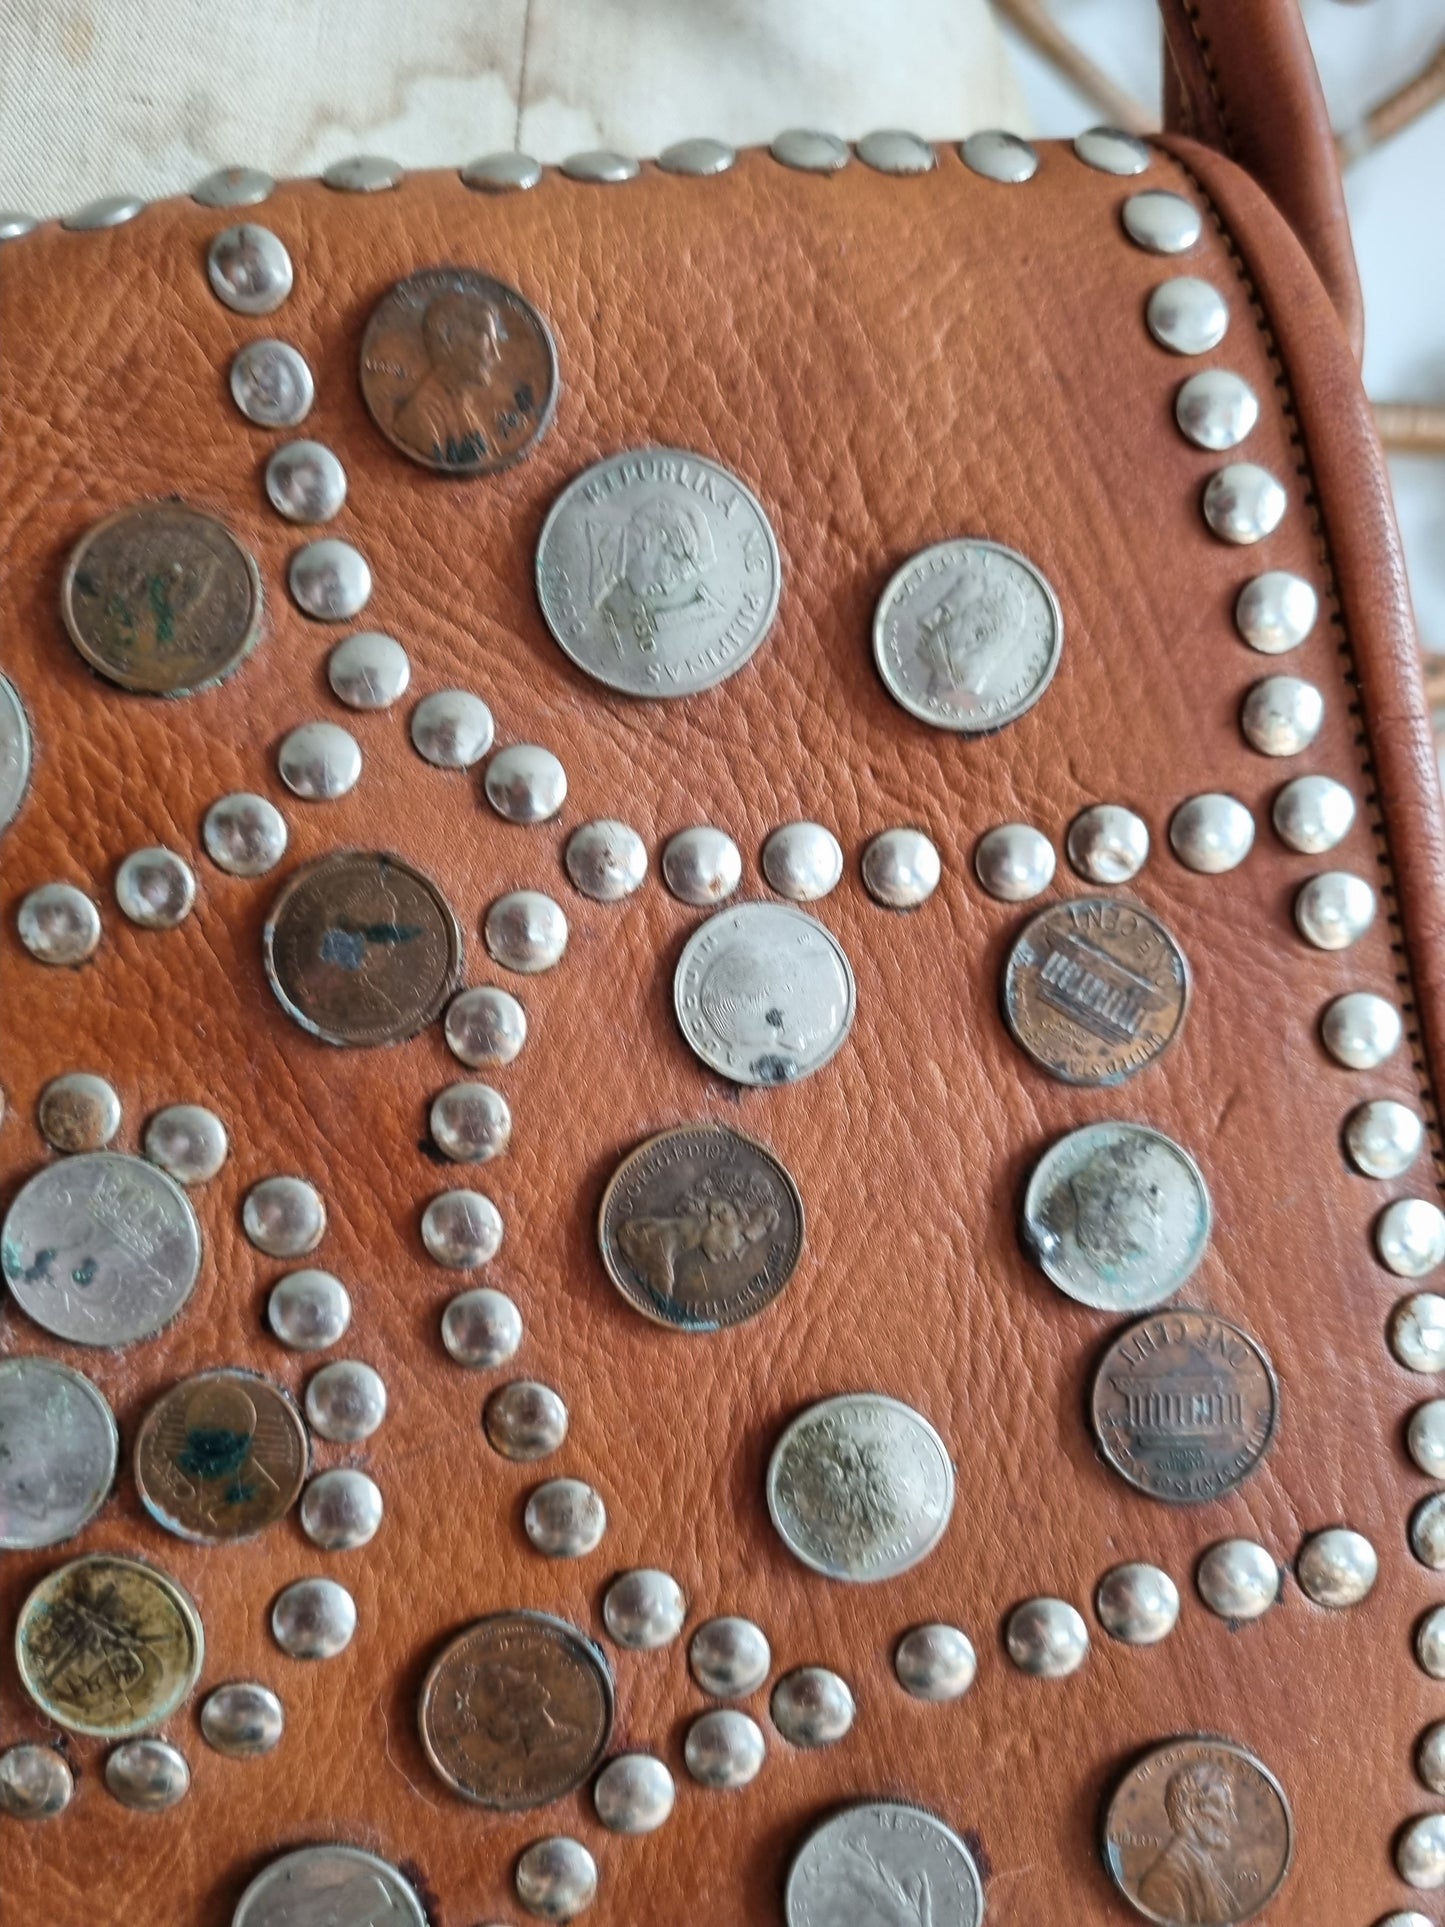 Vintage brown coin leather bag